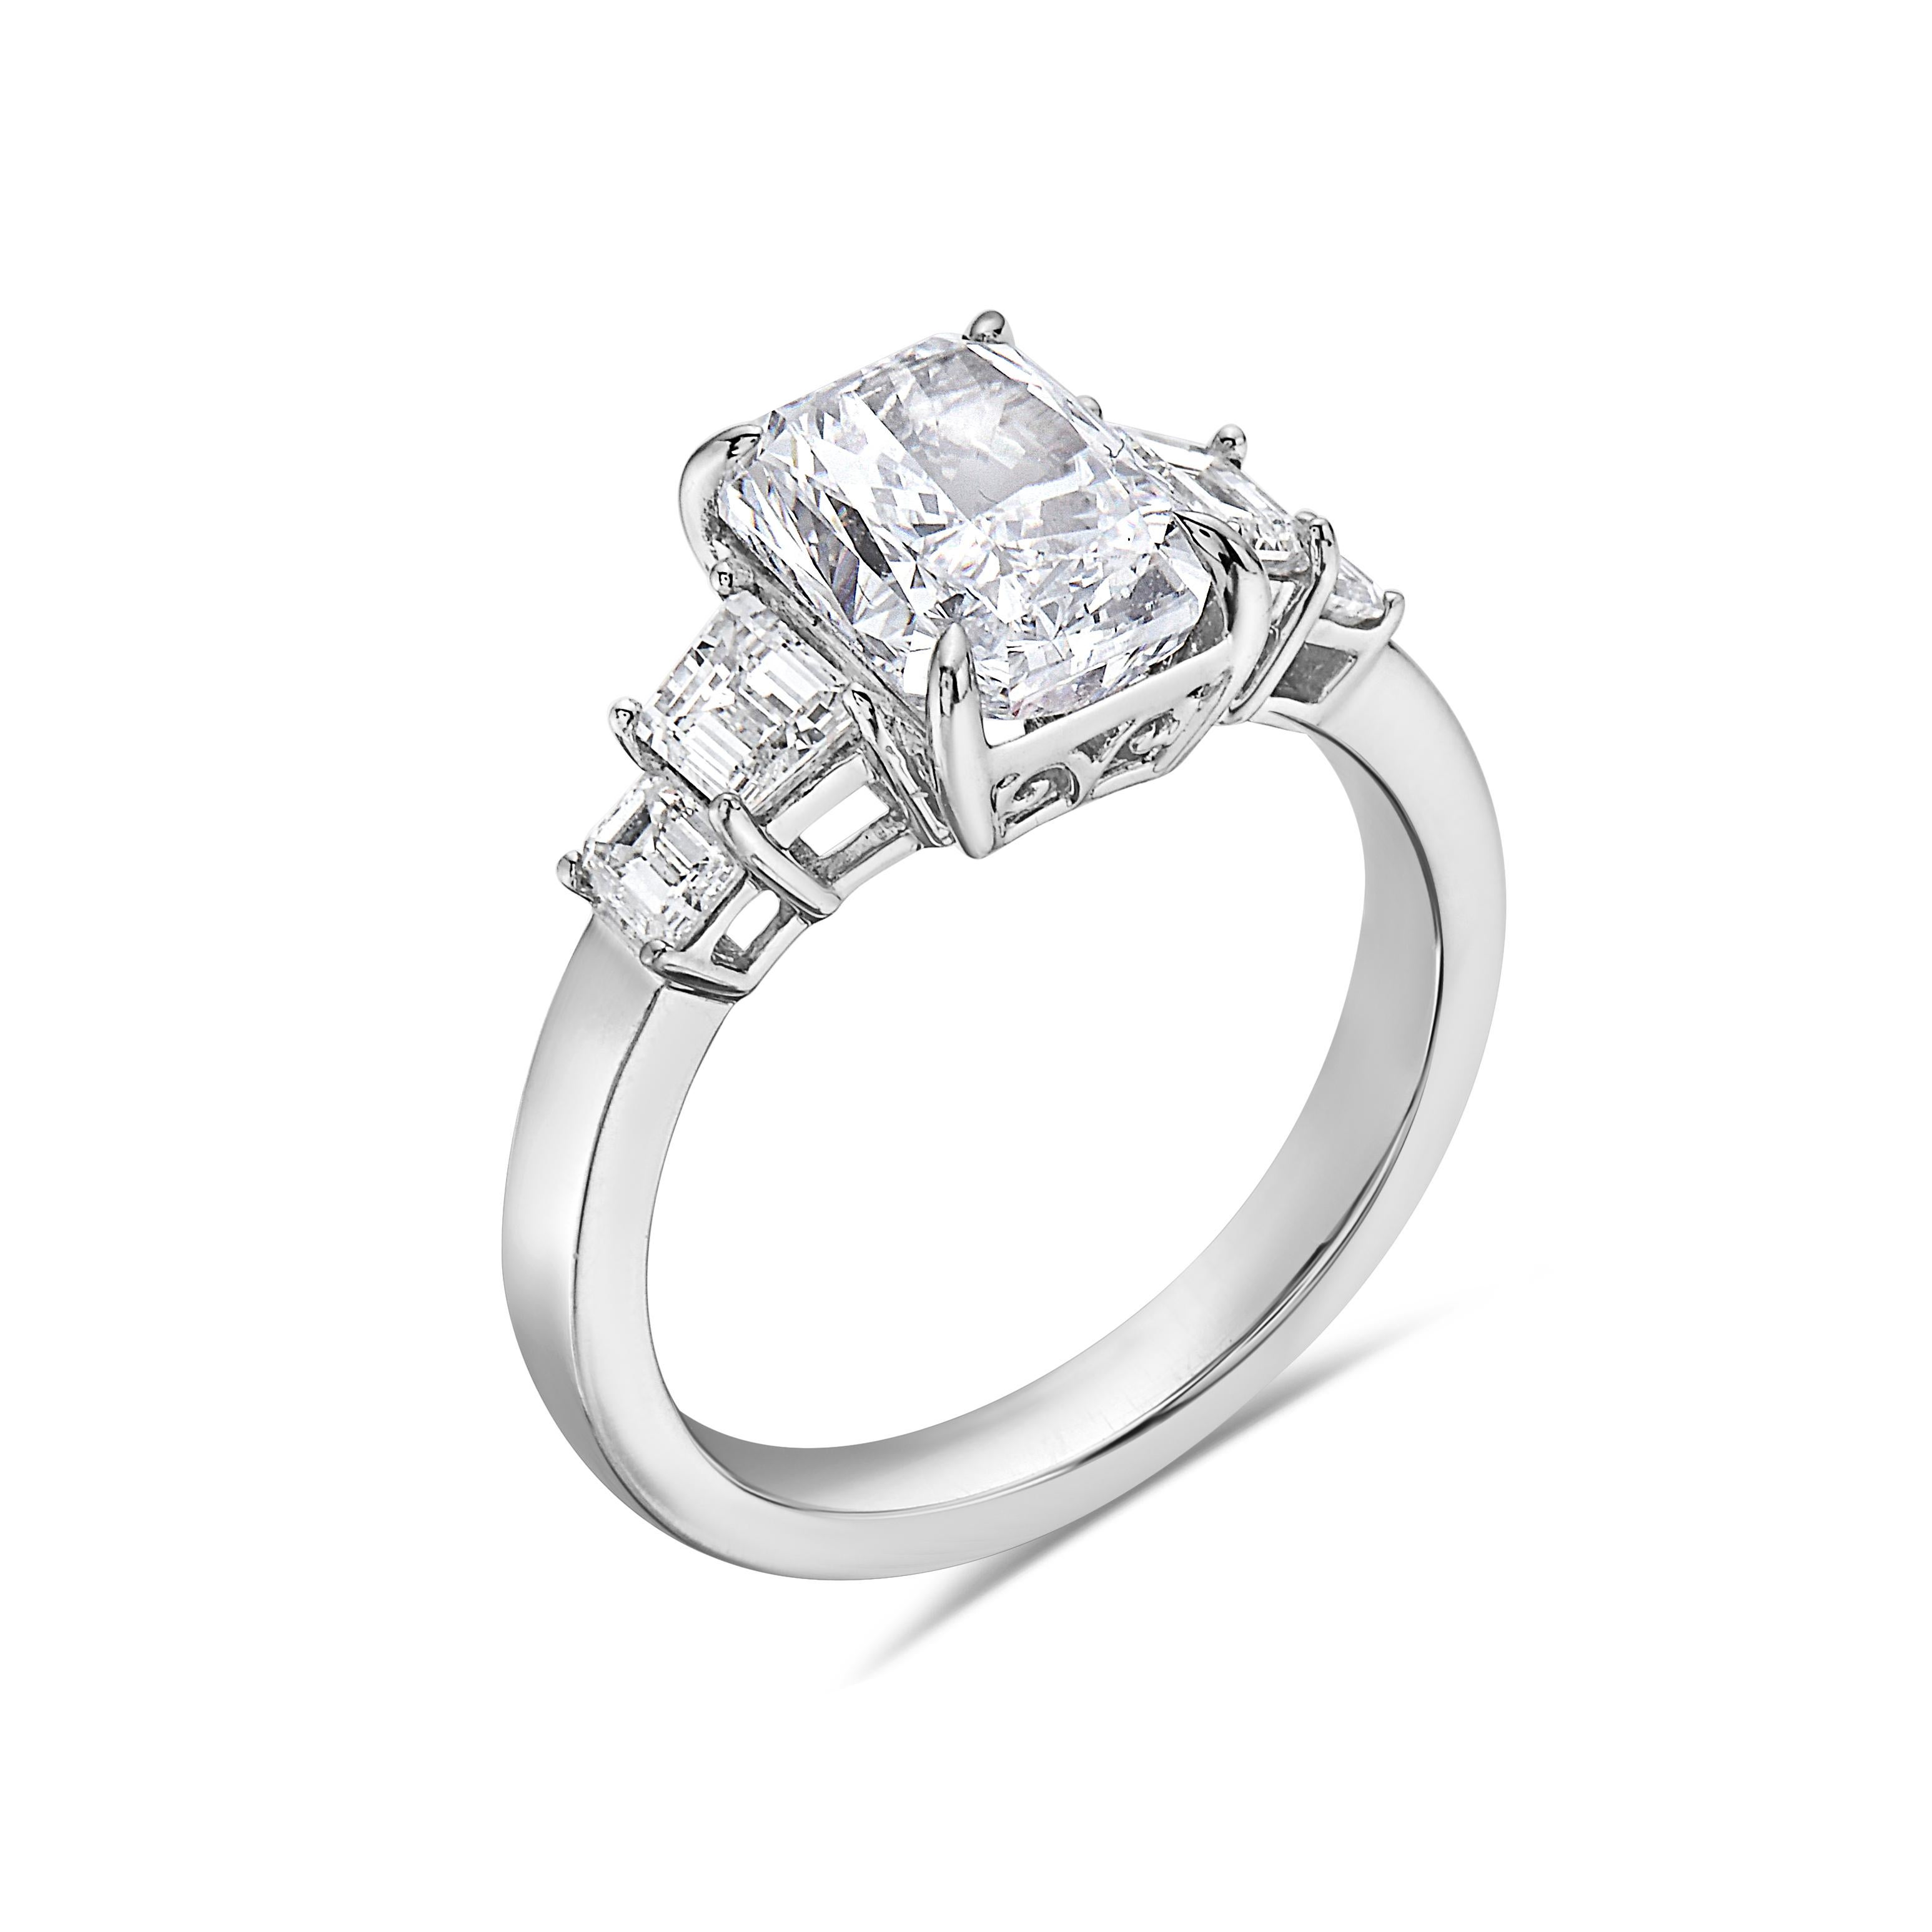 Metal: 18k  White Gold
Diamond: E Diamond Cut VVS1 
Diamond Shape: Emerald Cut
Diamond Carat Total Weight:2.90ctw
Diamond: White Diamond 
Diamond Shape: Round
Diamond Carat Total Weight:0.87 ctw
Size:7